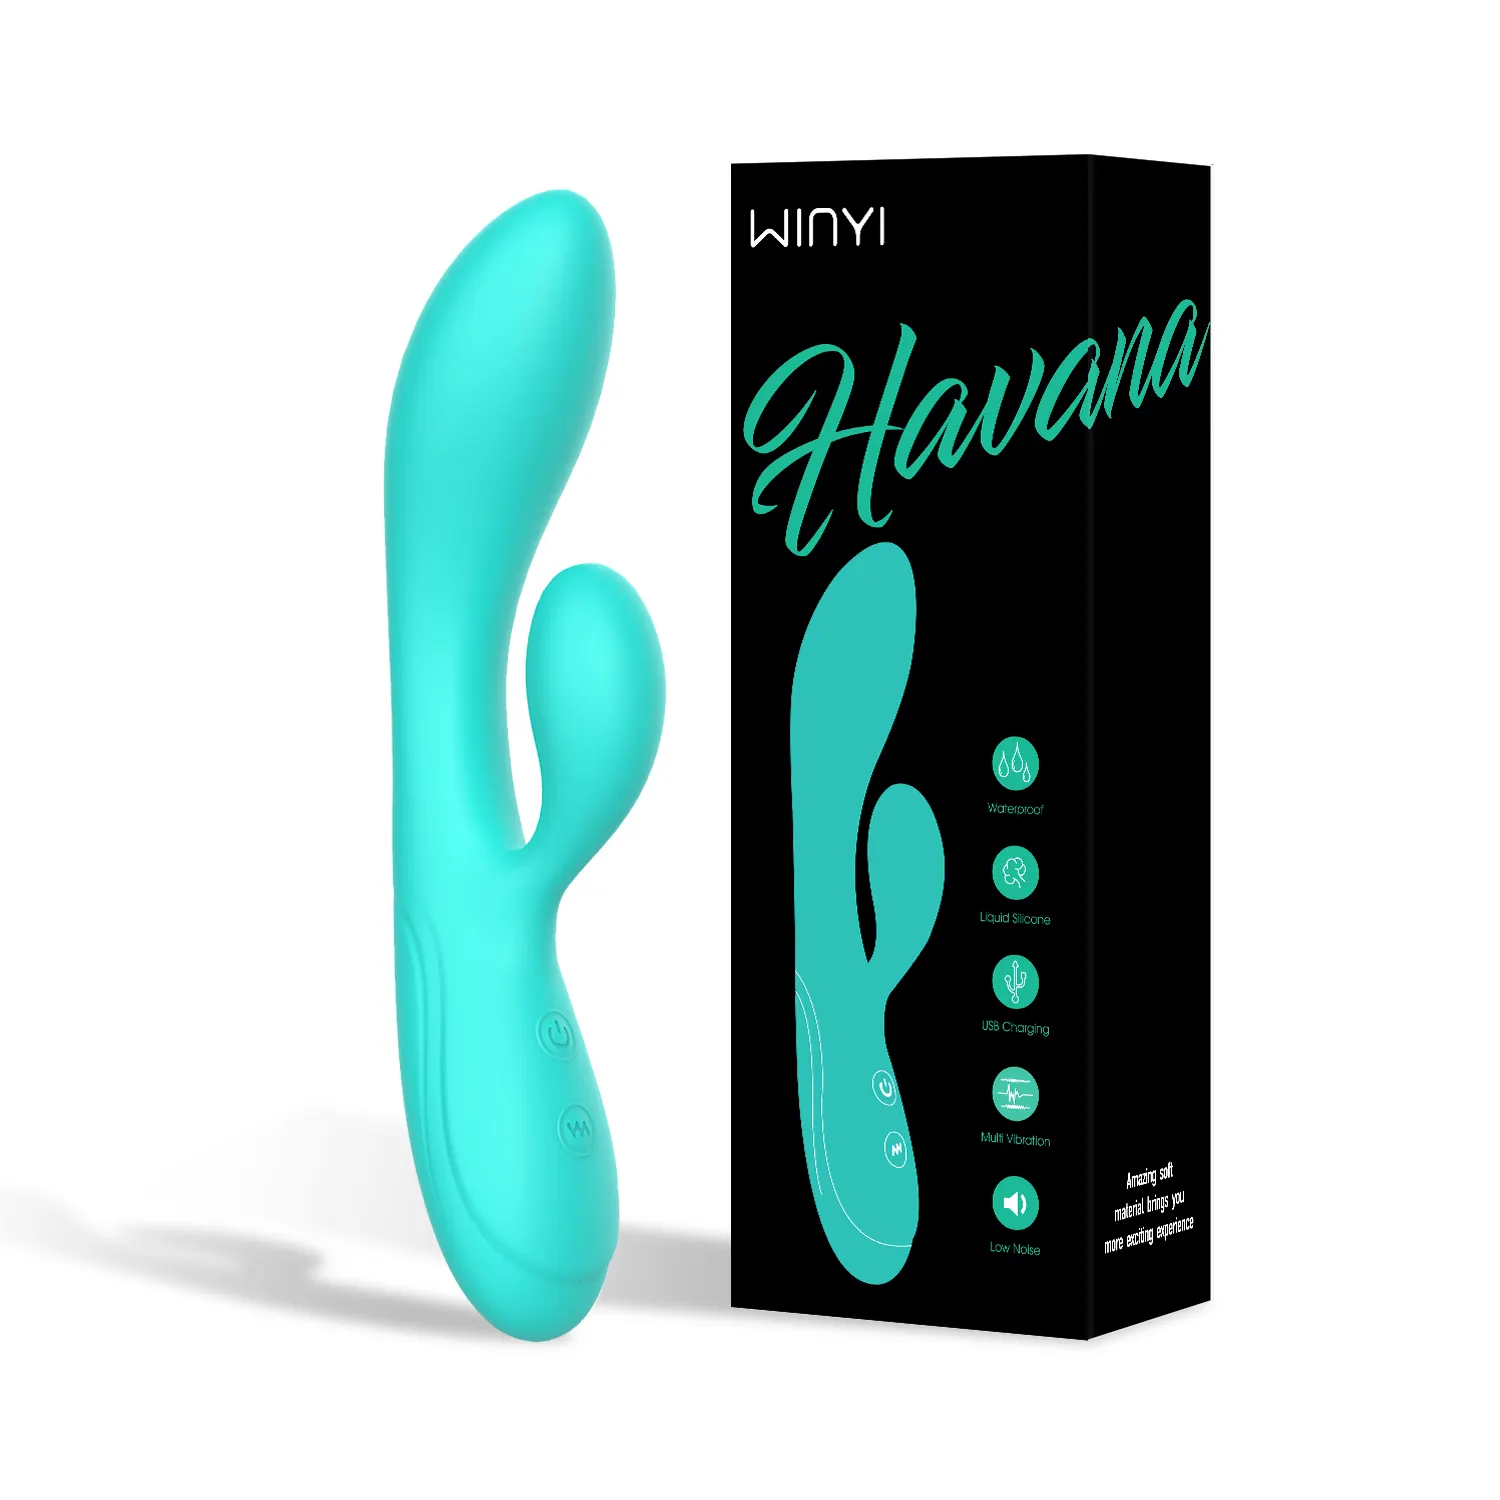 WINYI wholesale adult sexual dual vibrating dildo toy 10 mode clitoris G spot stimulator sex rabbit vibrator sex toys for woman